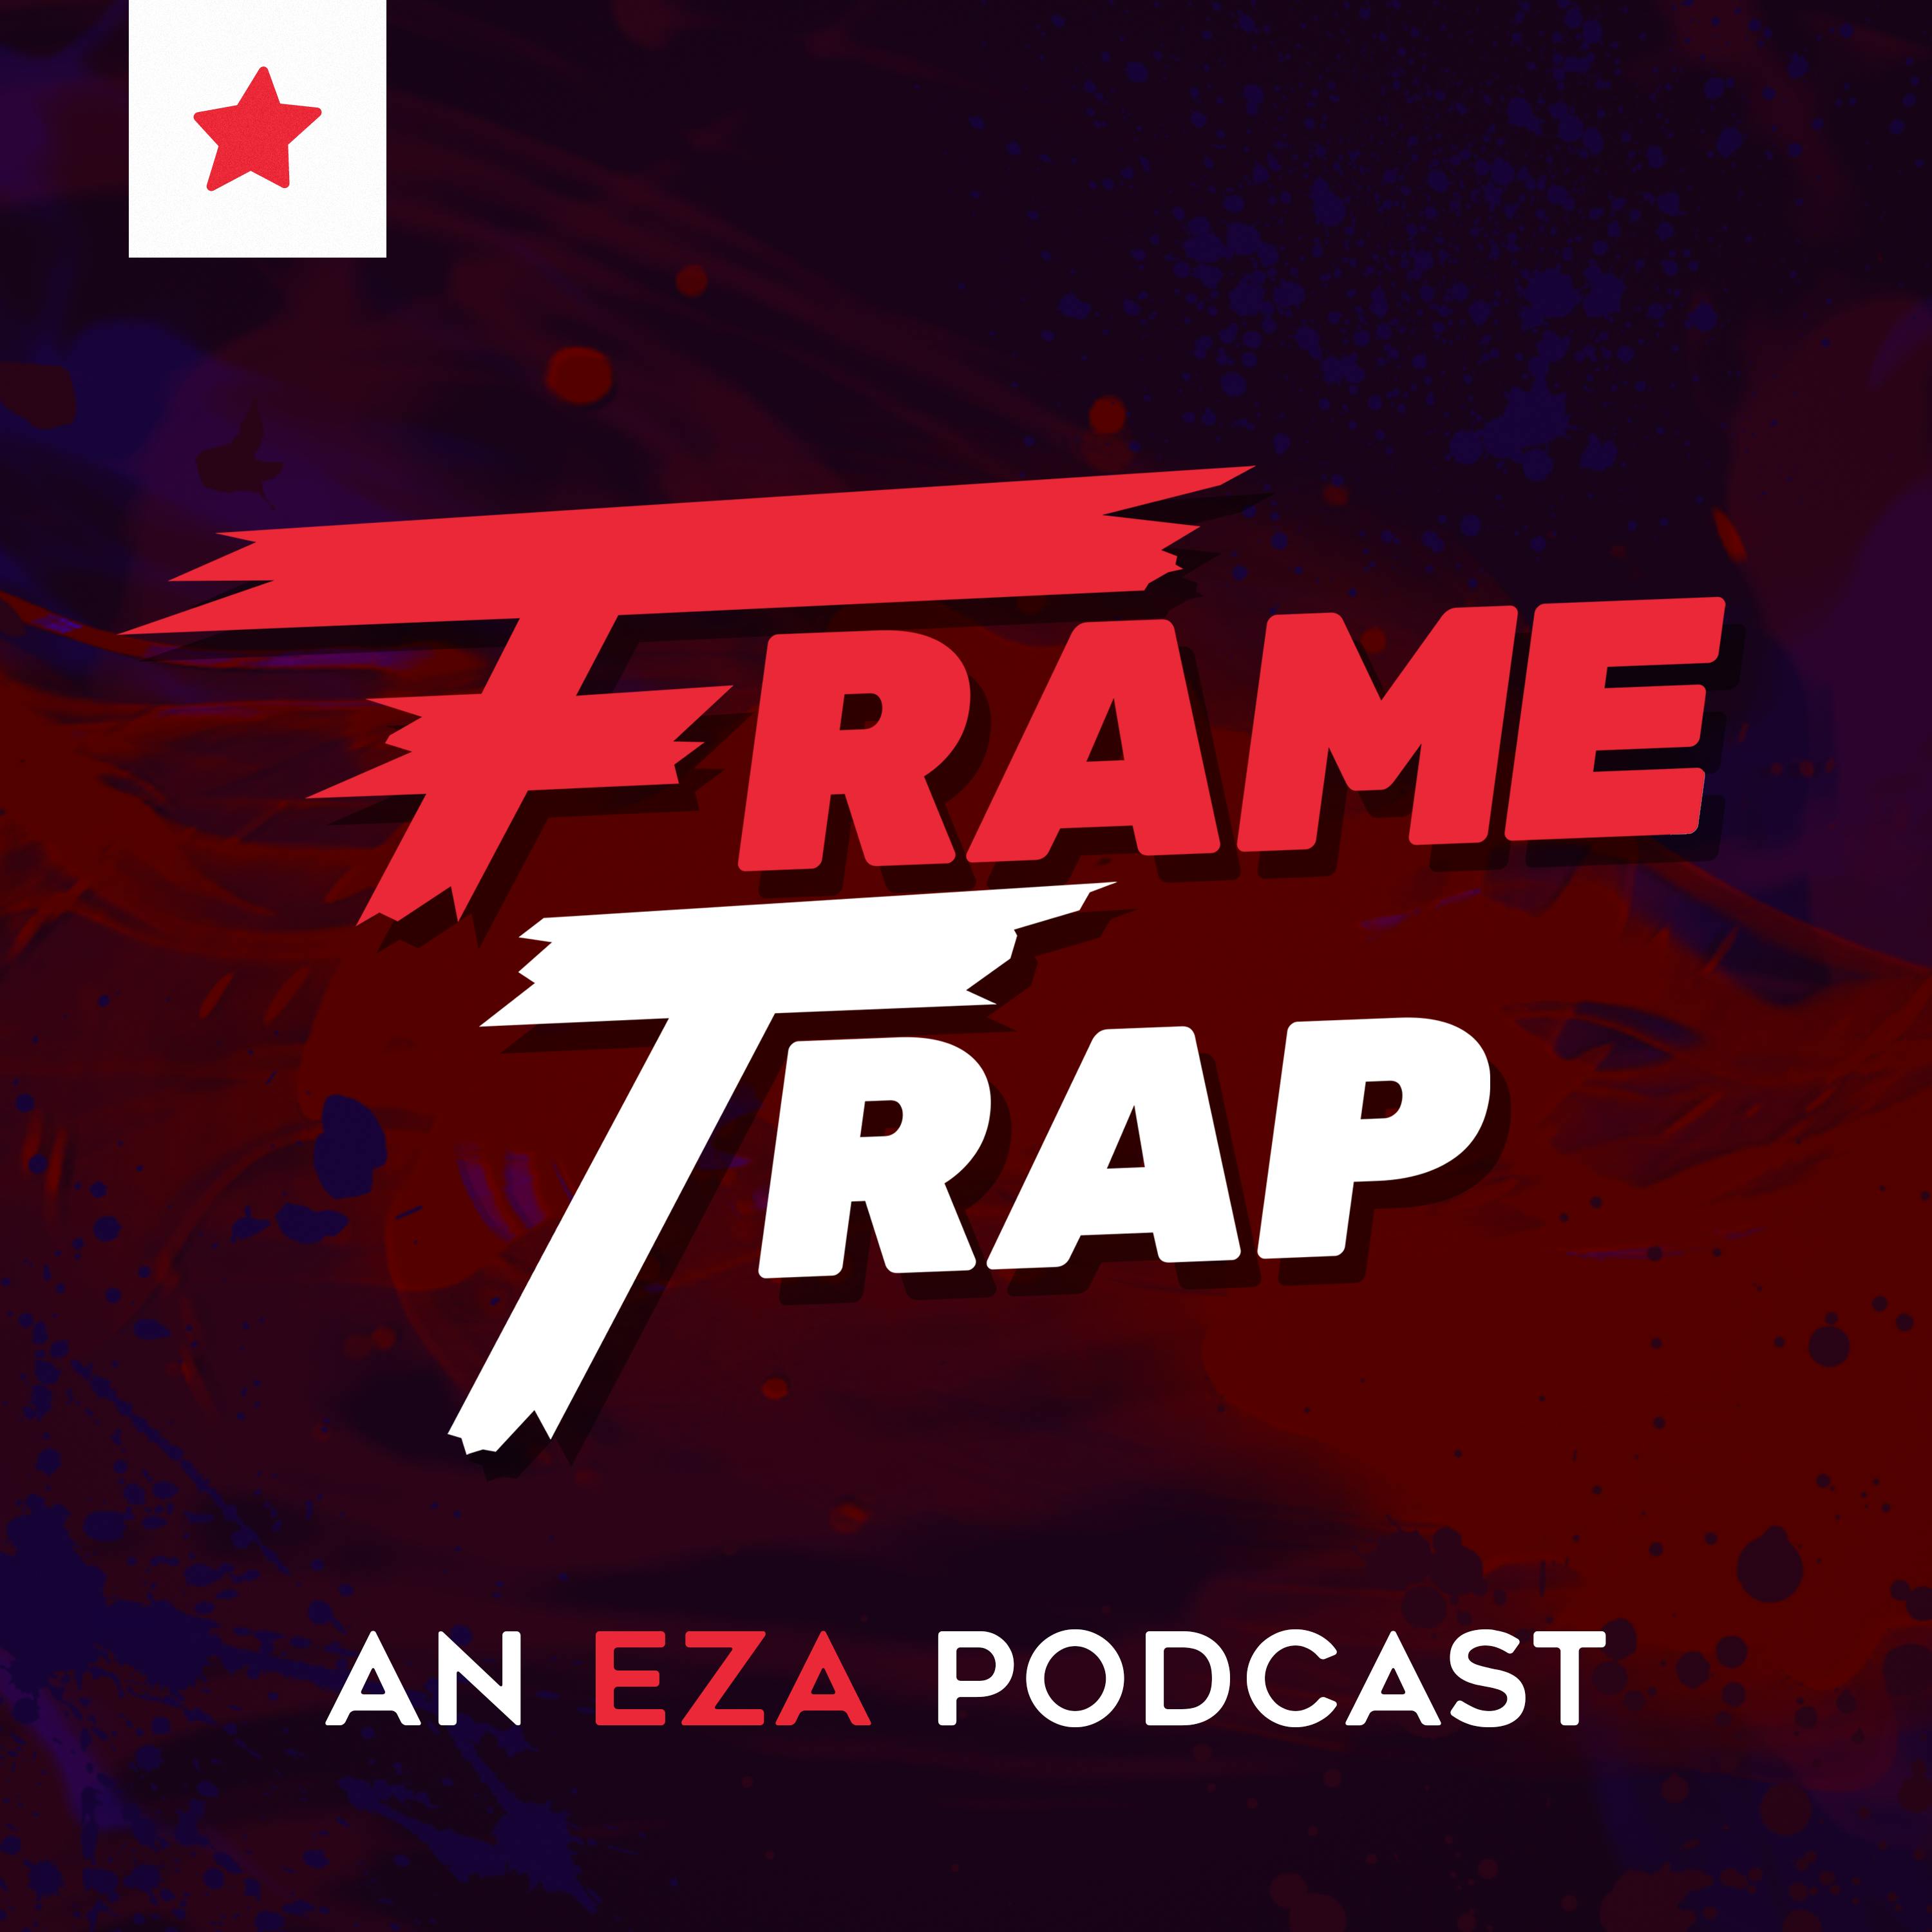 Frame Trap - Episode 191 ”Beat ’Em Ups are THRIVING!’